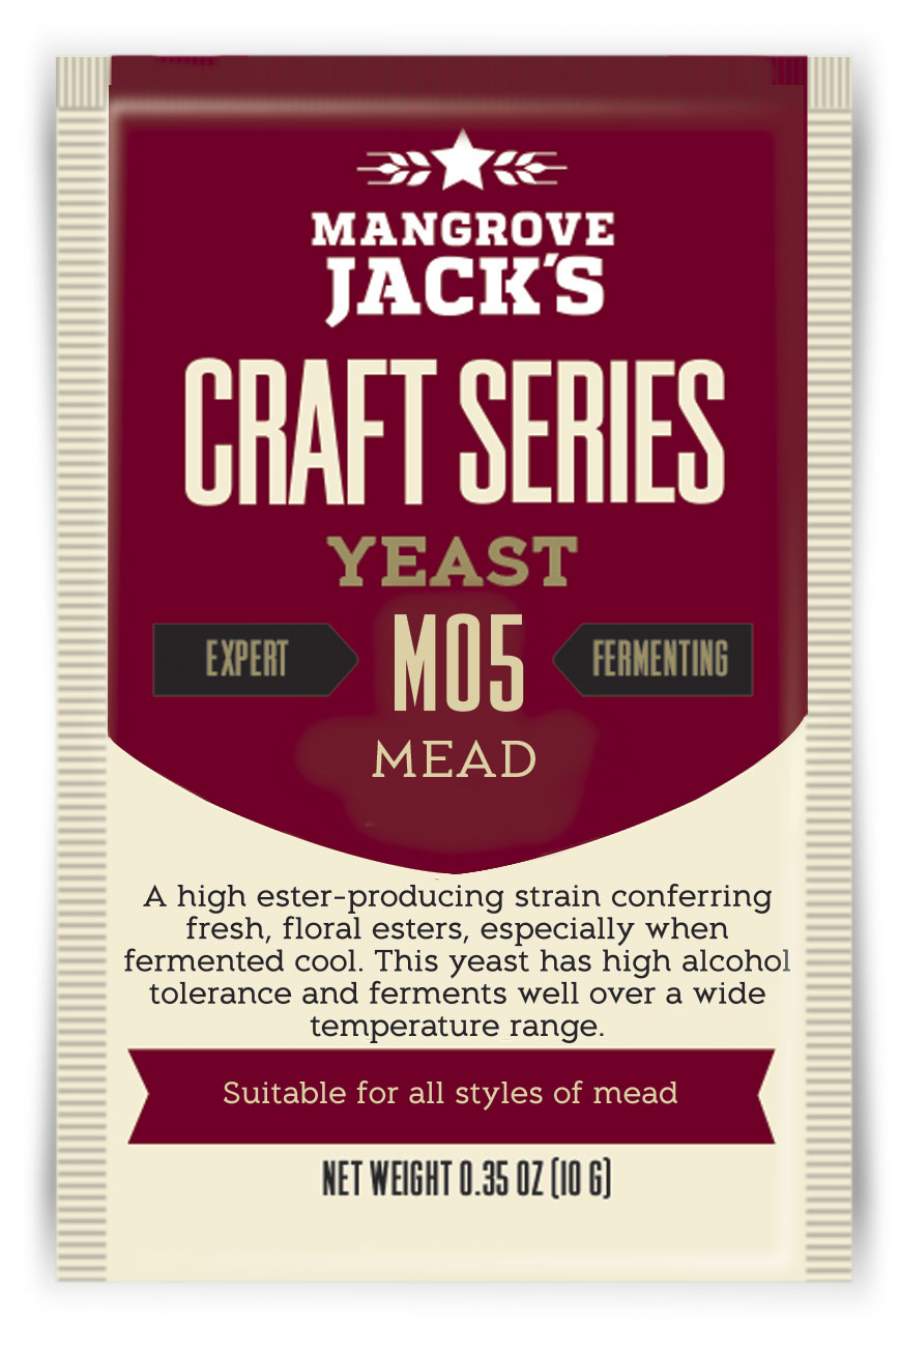 Mead - Mangrove Jack's Craft Series - 10 g